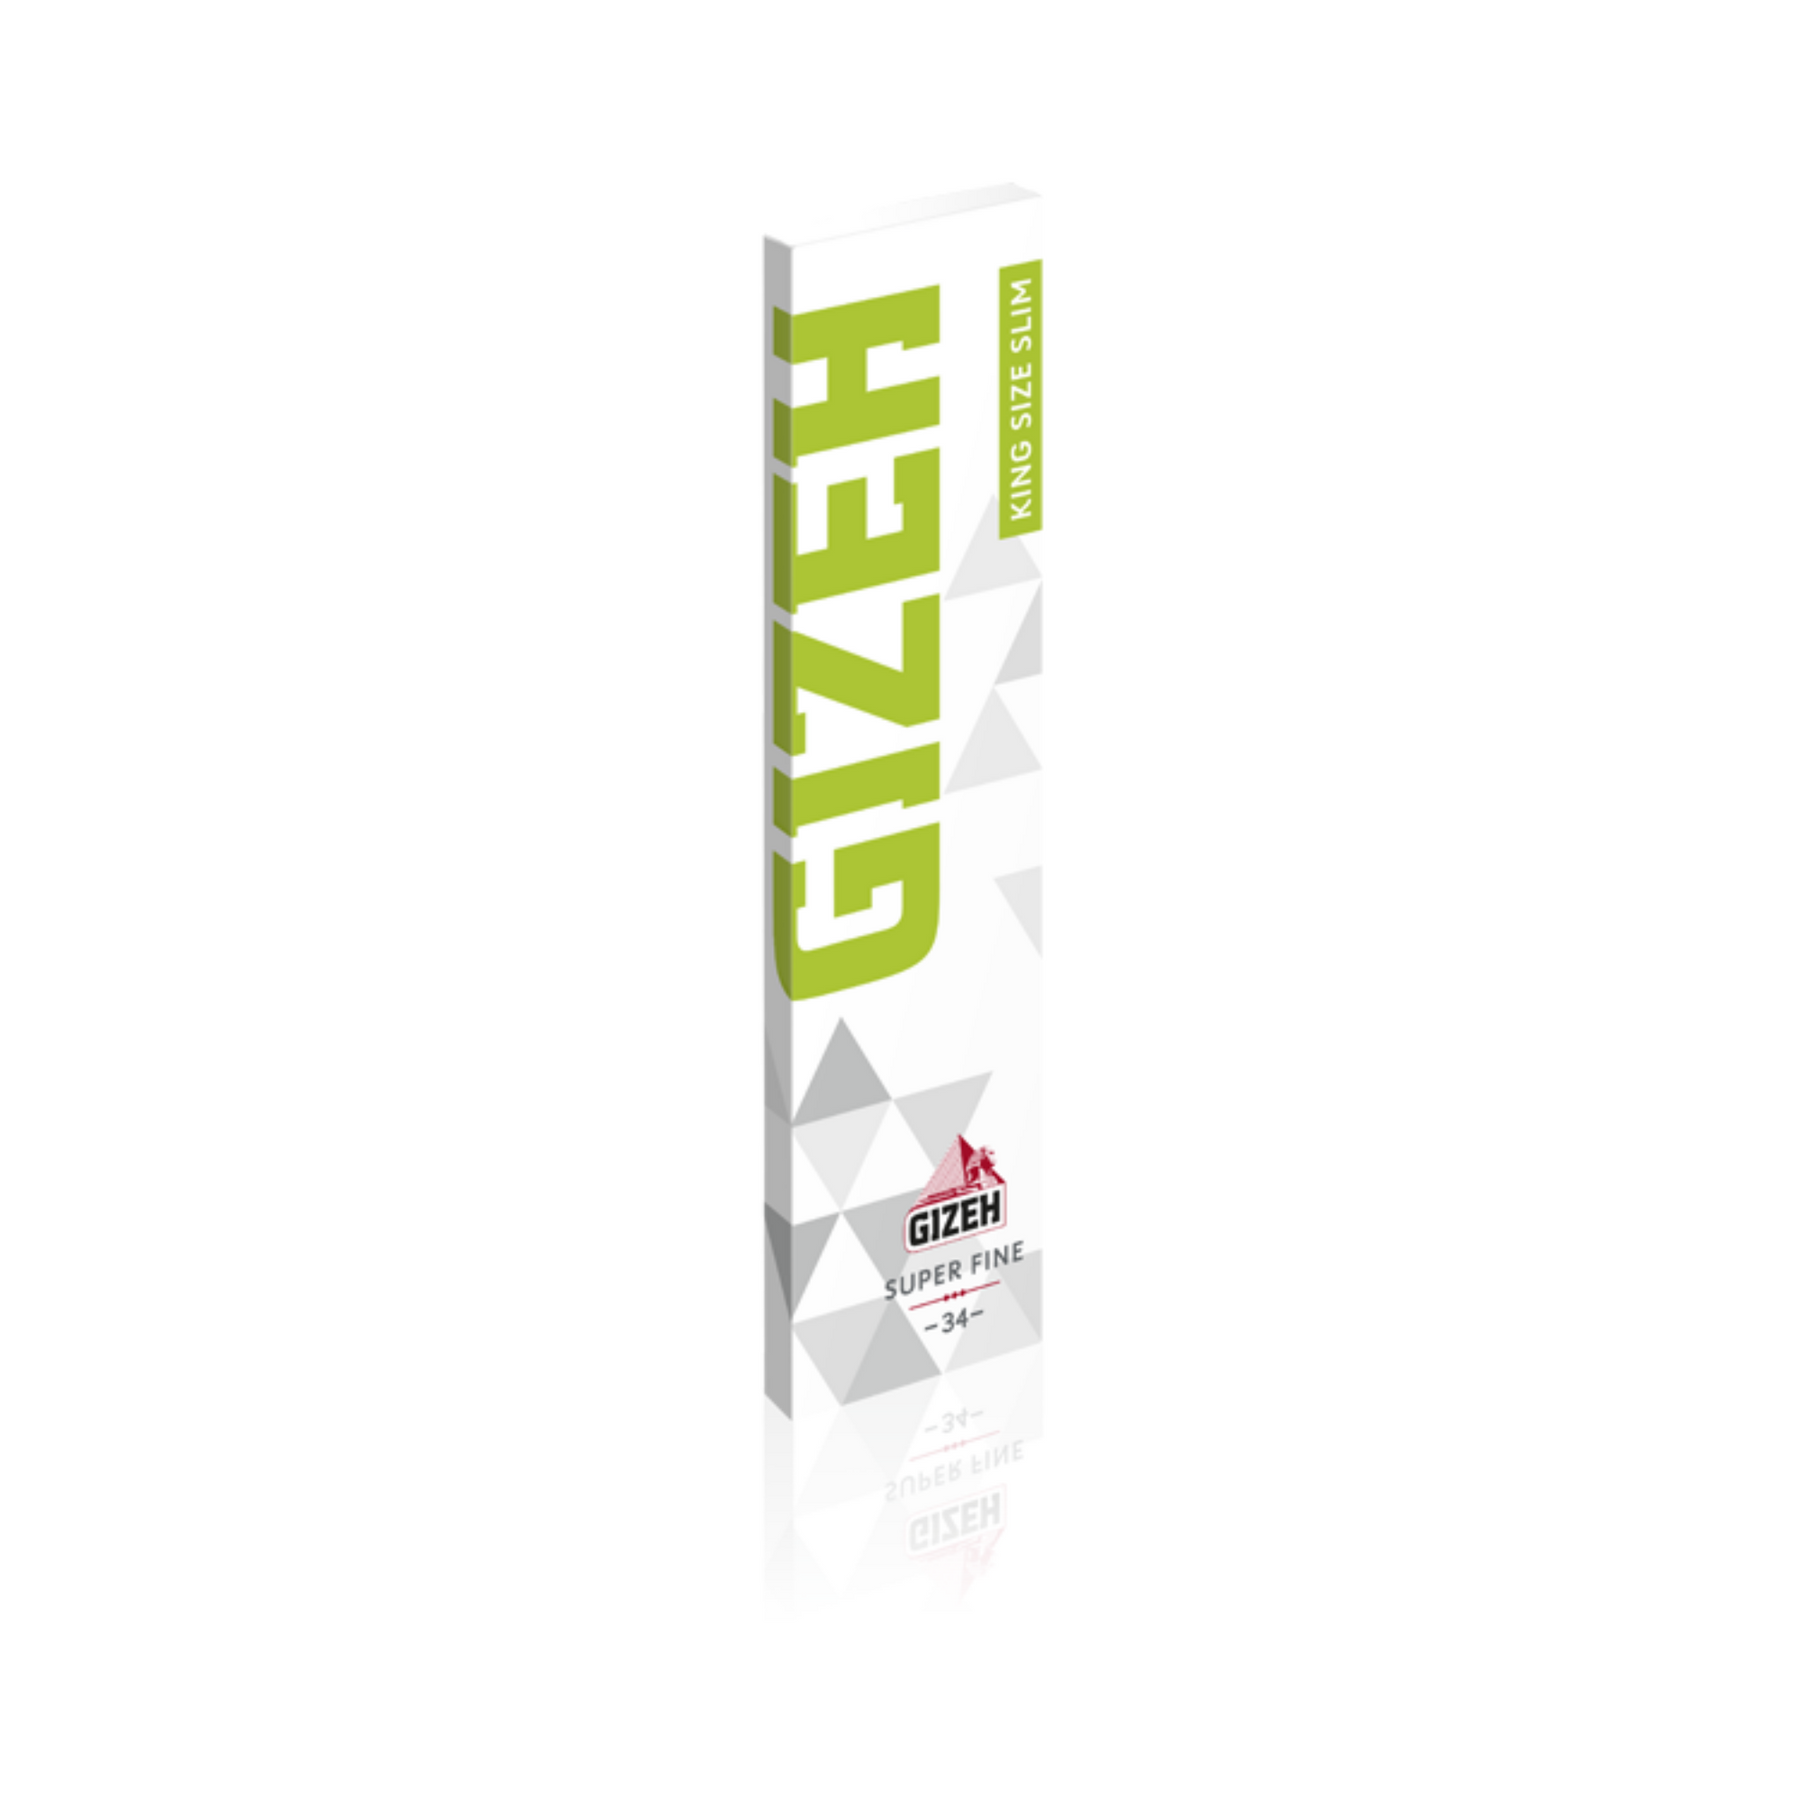 GIZEH Super Fine Rolling Paper King Size Slim - Magnet Seal